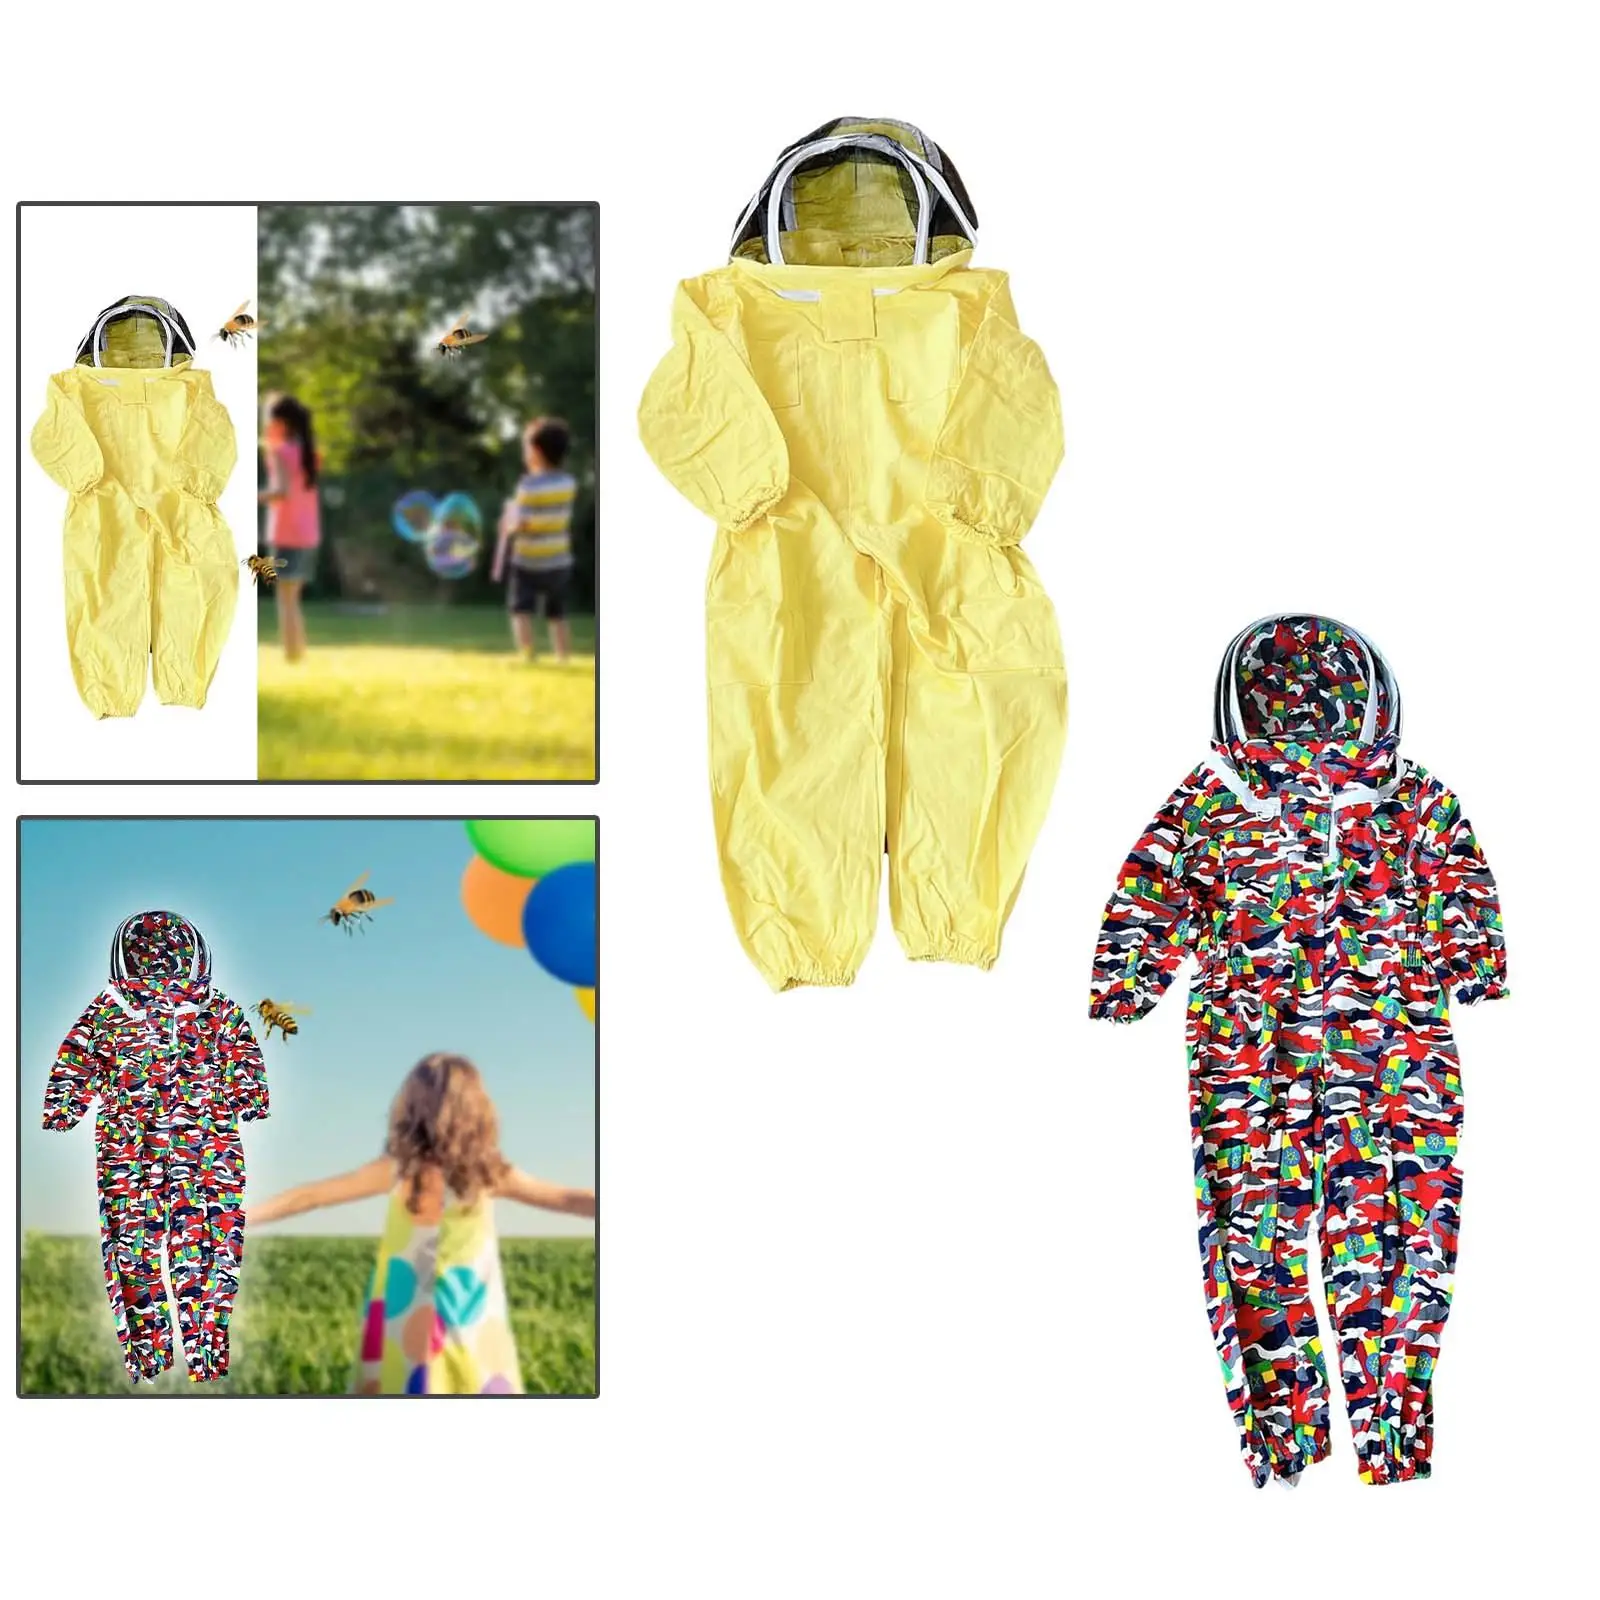 Kids Beekeeper Suit Beekeeping Suit Comfortable Protective Equipment with Ventilated Veil Hood for Boys Children Girls